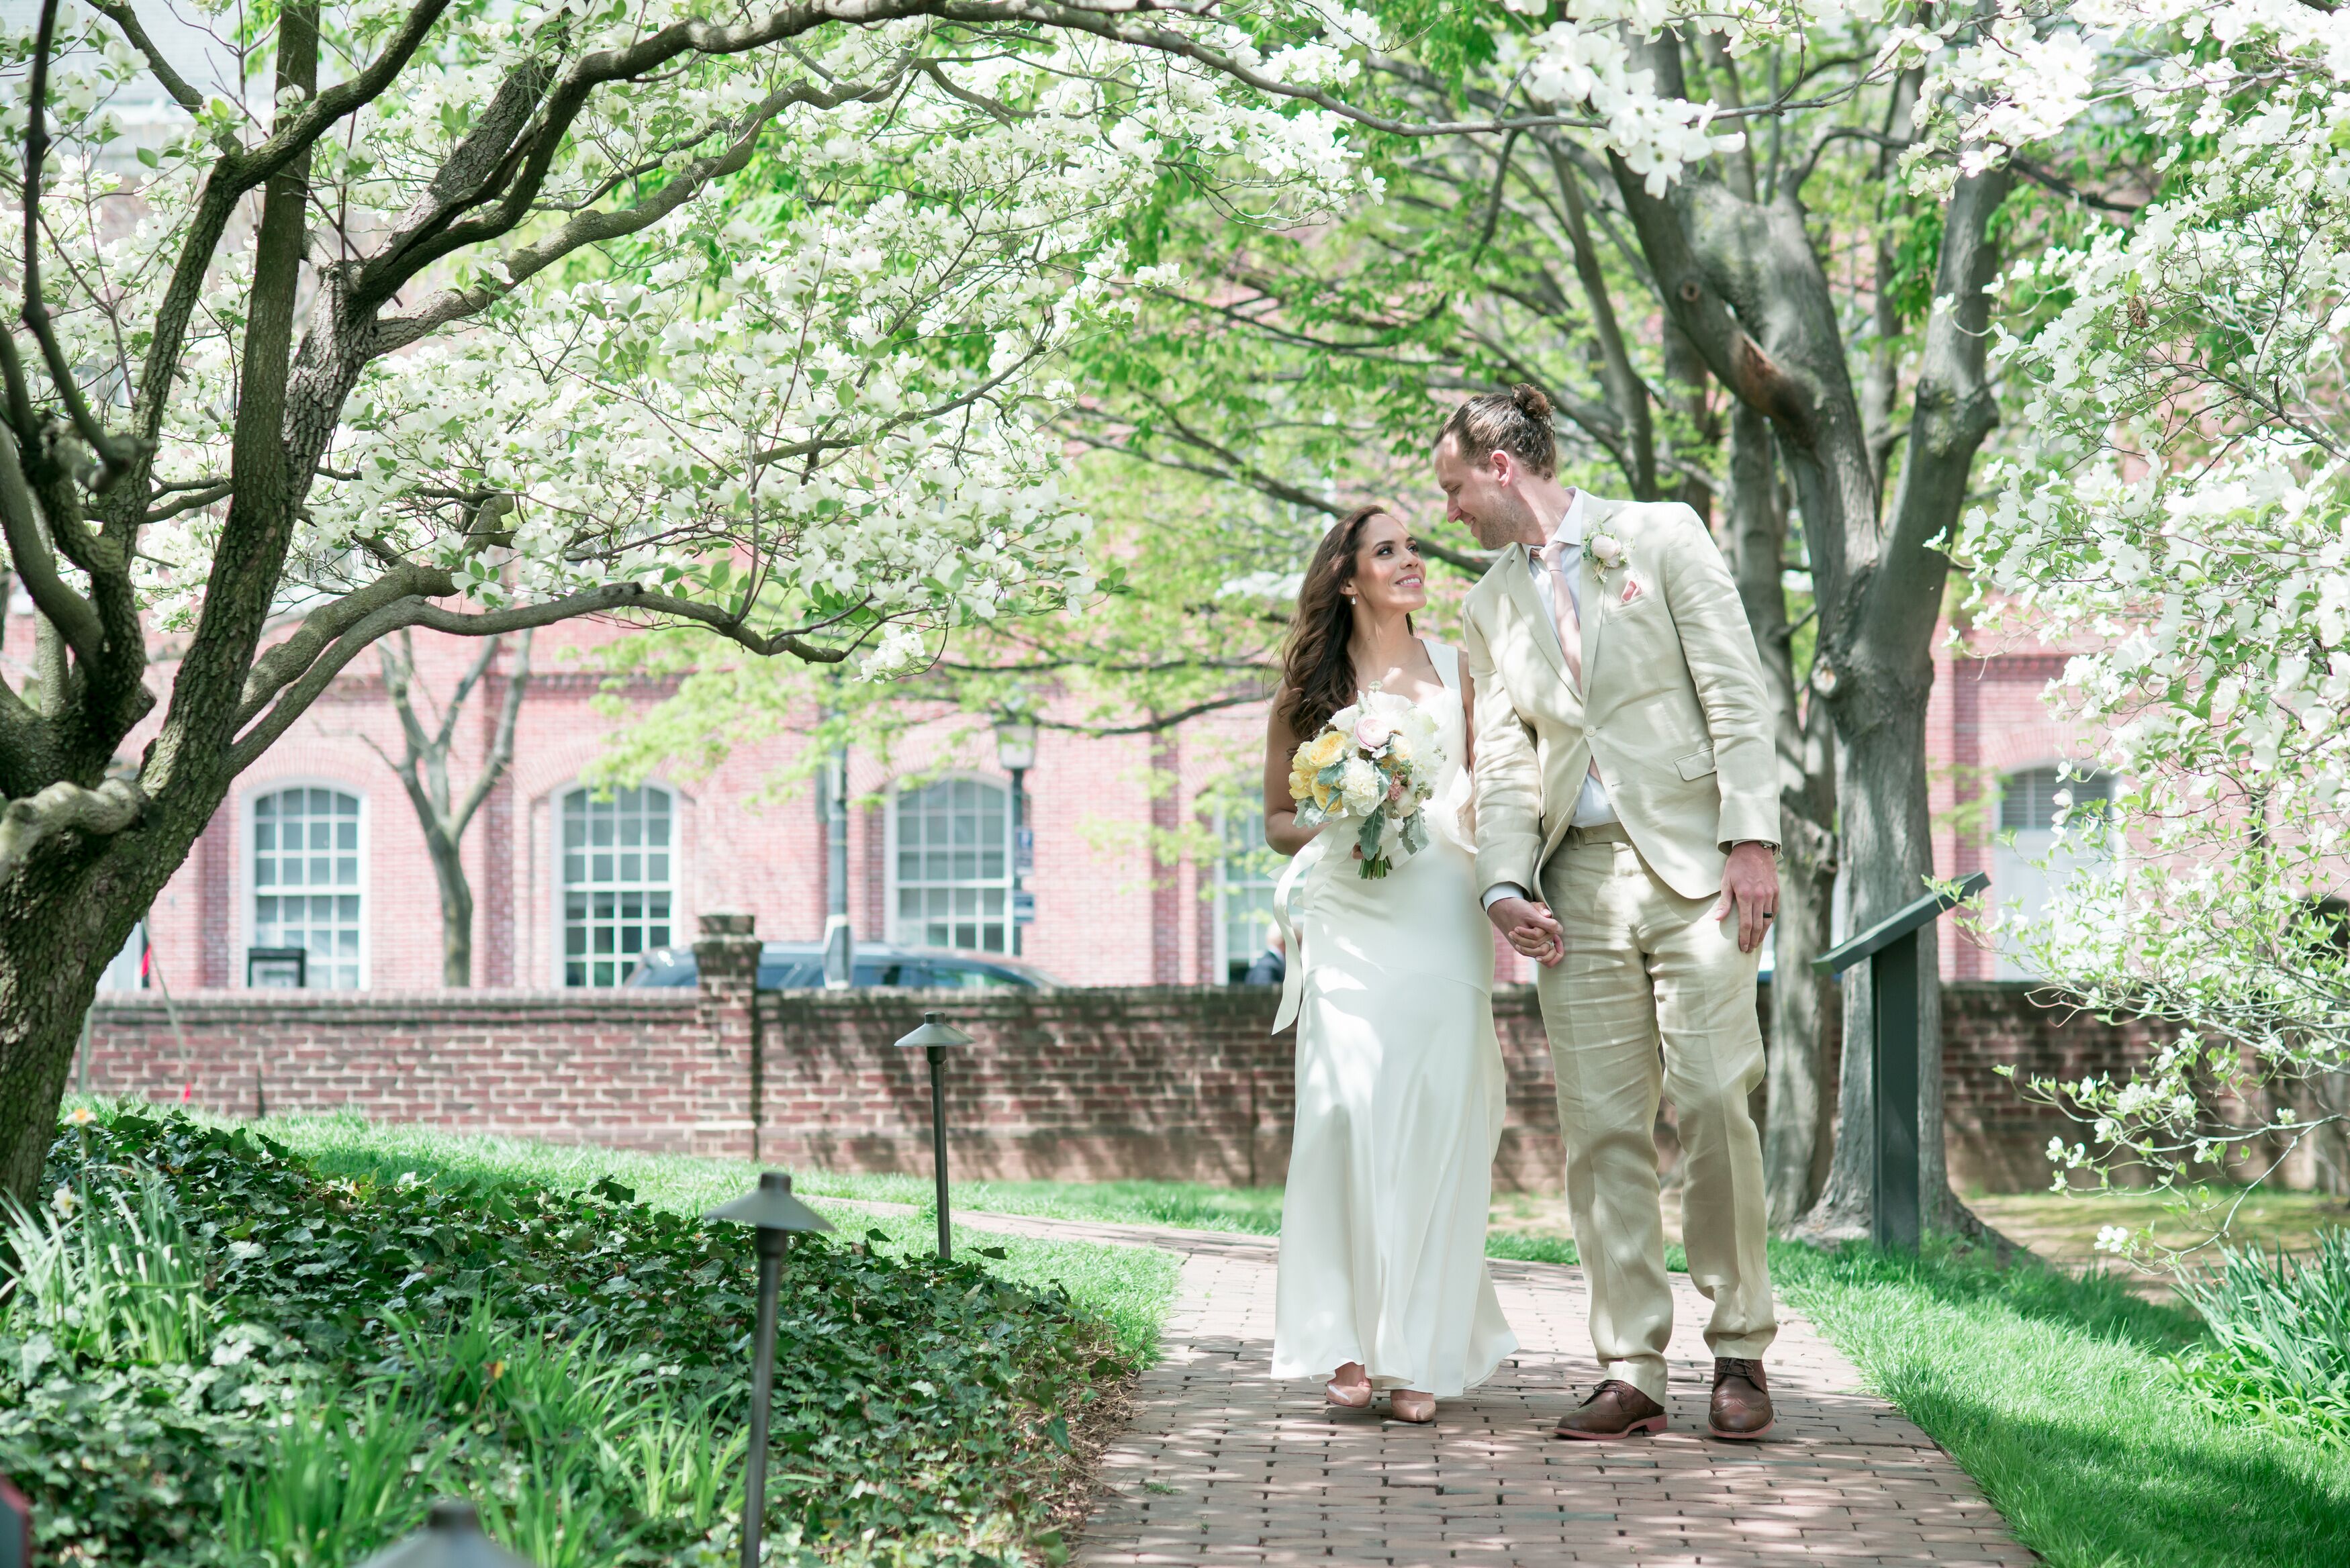 Amazing Alexandria Virginia Wedding Venues  The ultimate guide 